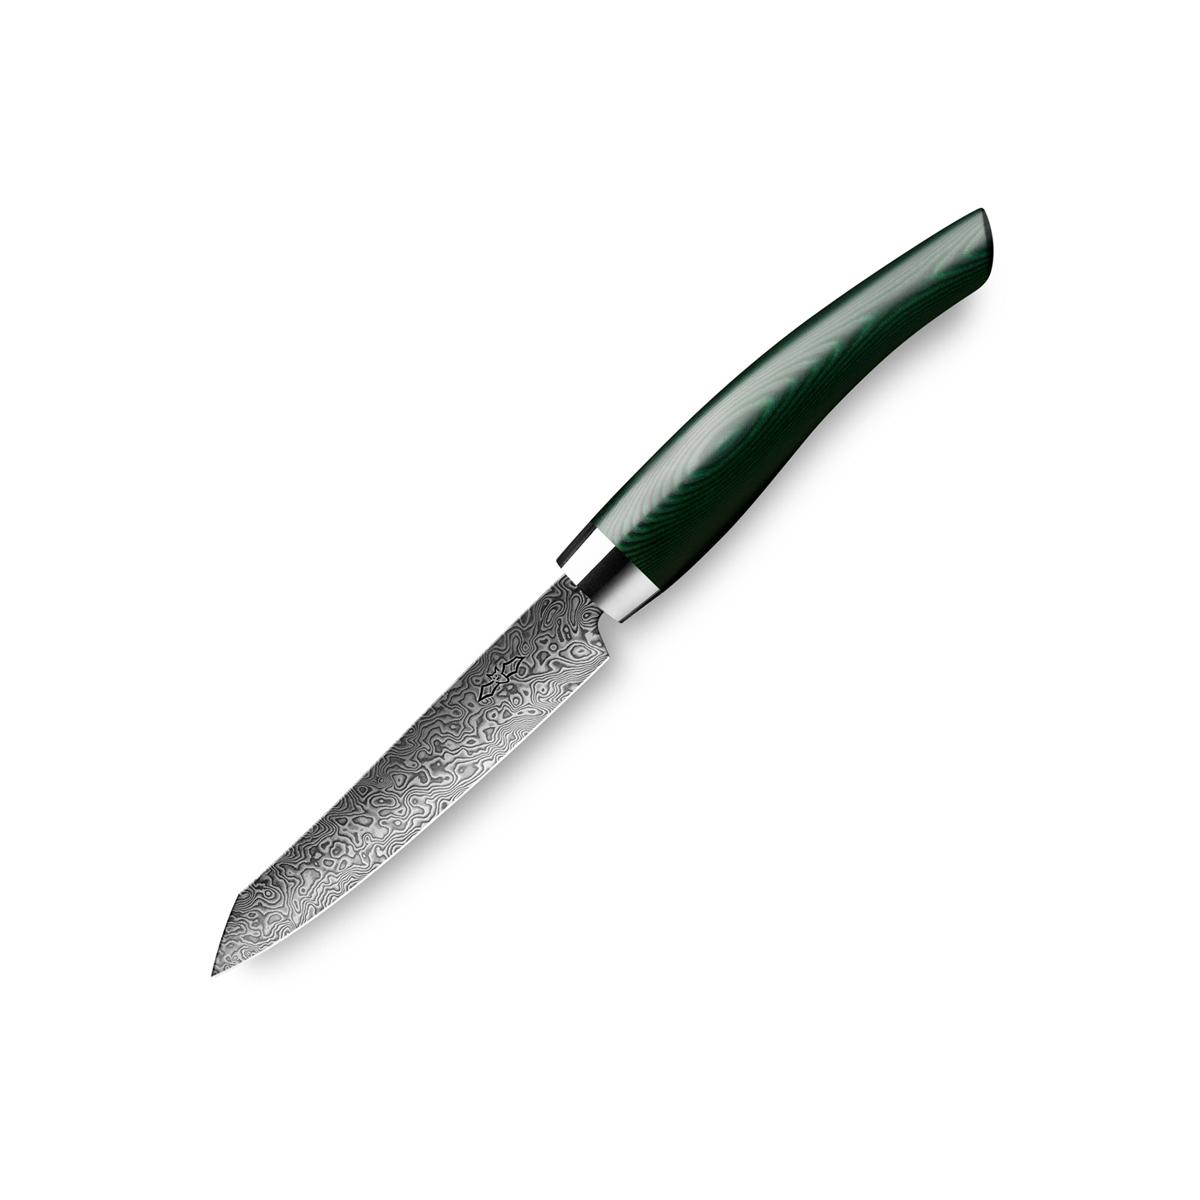 Nesmuk Exklusiv C 90 Damast Officemesser 9 cm - Griff Micarta grün